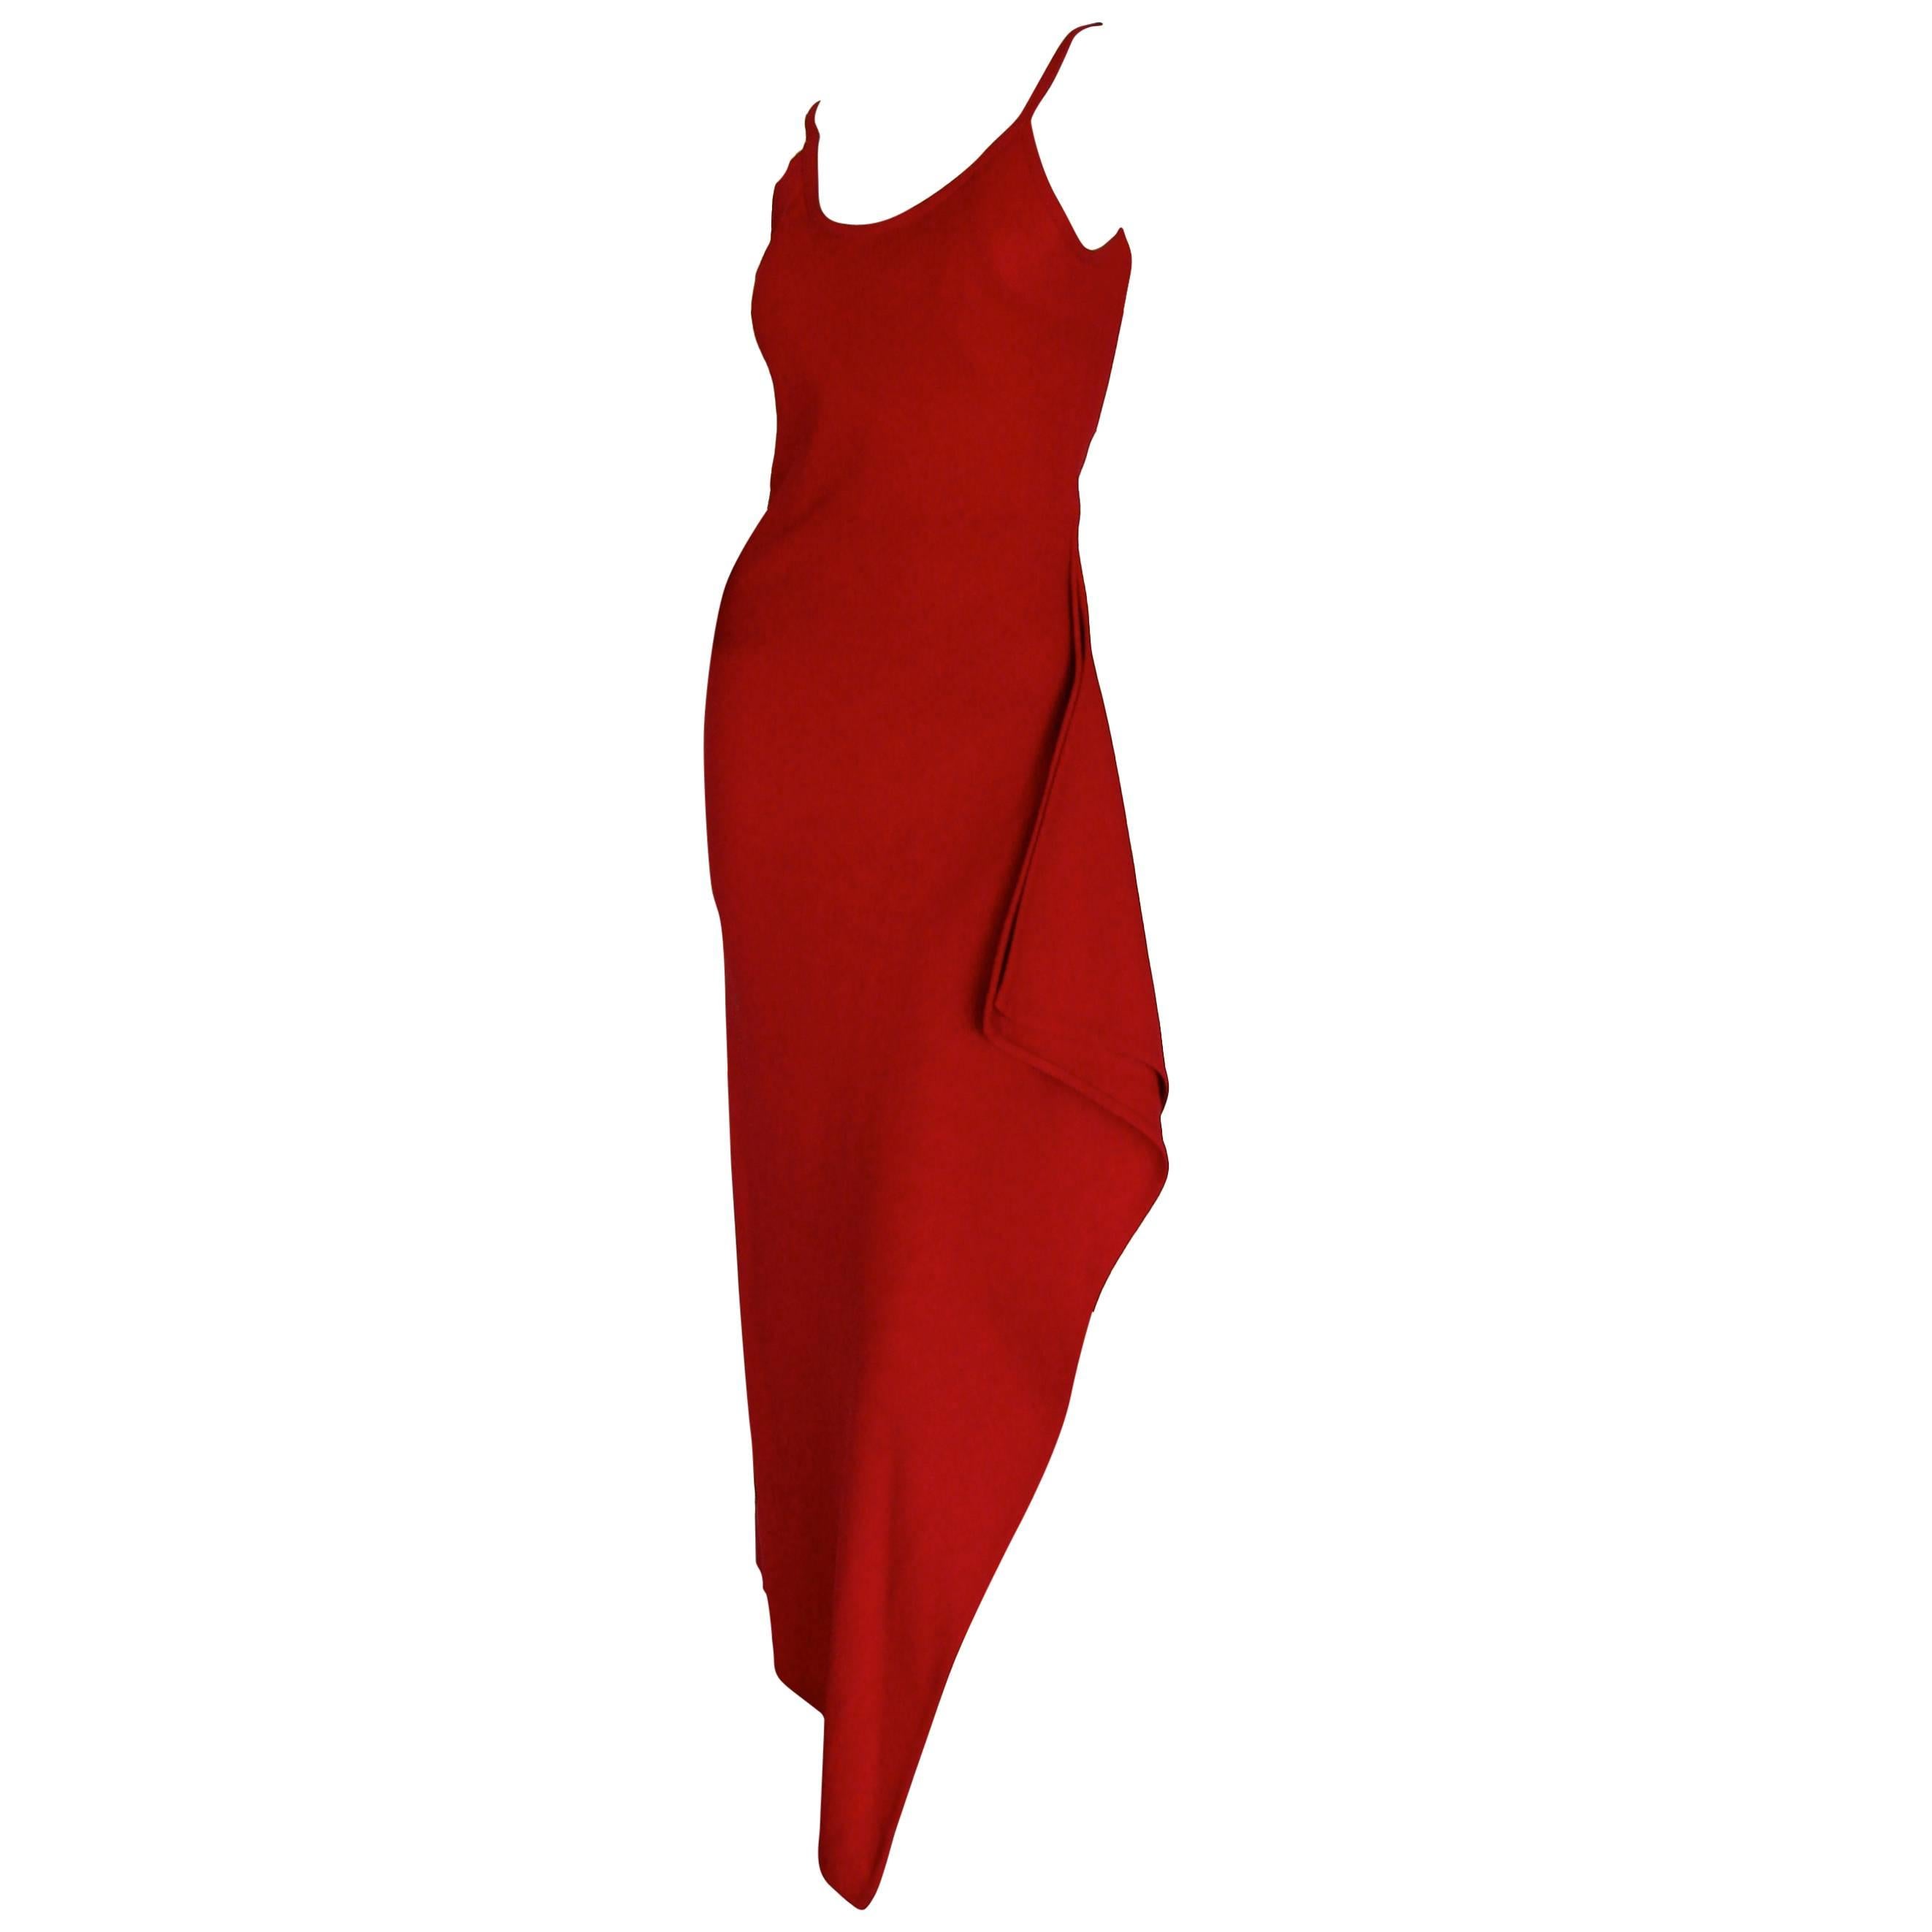 Gianni Versace Couture Red Bustier Dress Long Asymmetric Hem 1990s Sz S/M